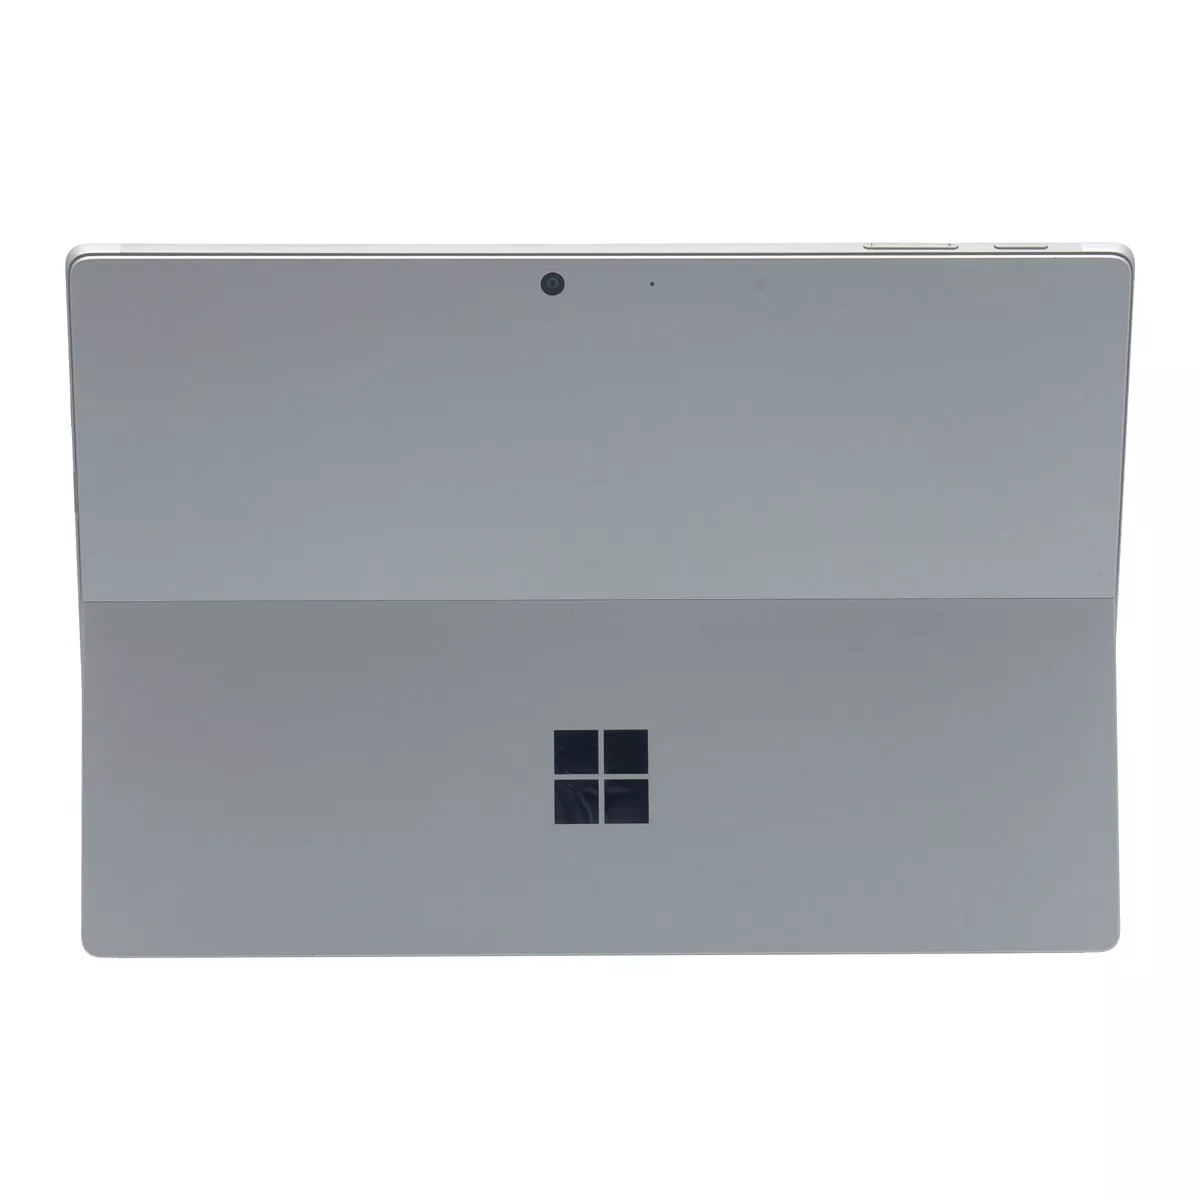 Microsoft Surface Pro 7 Core i5 1035G4 8 GB 128 GB SSD Webcam A